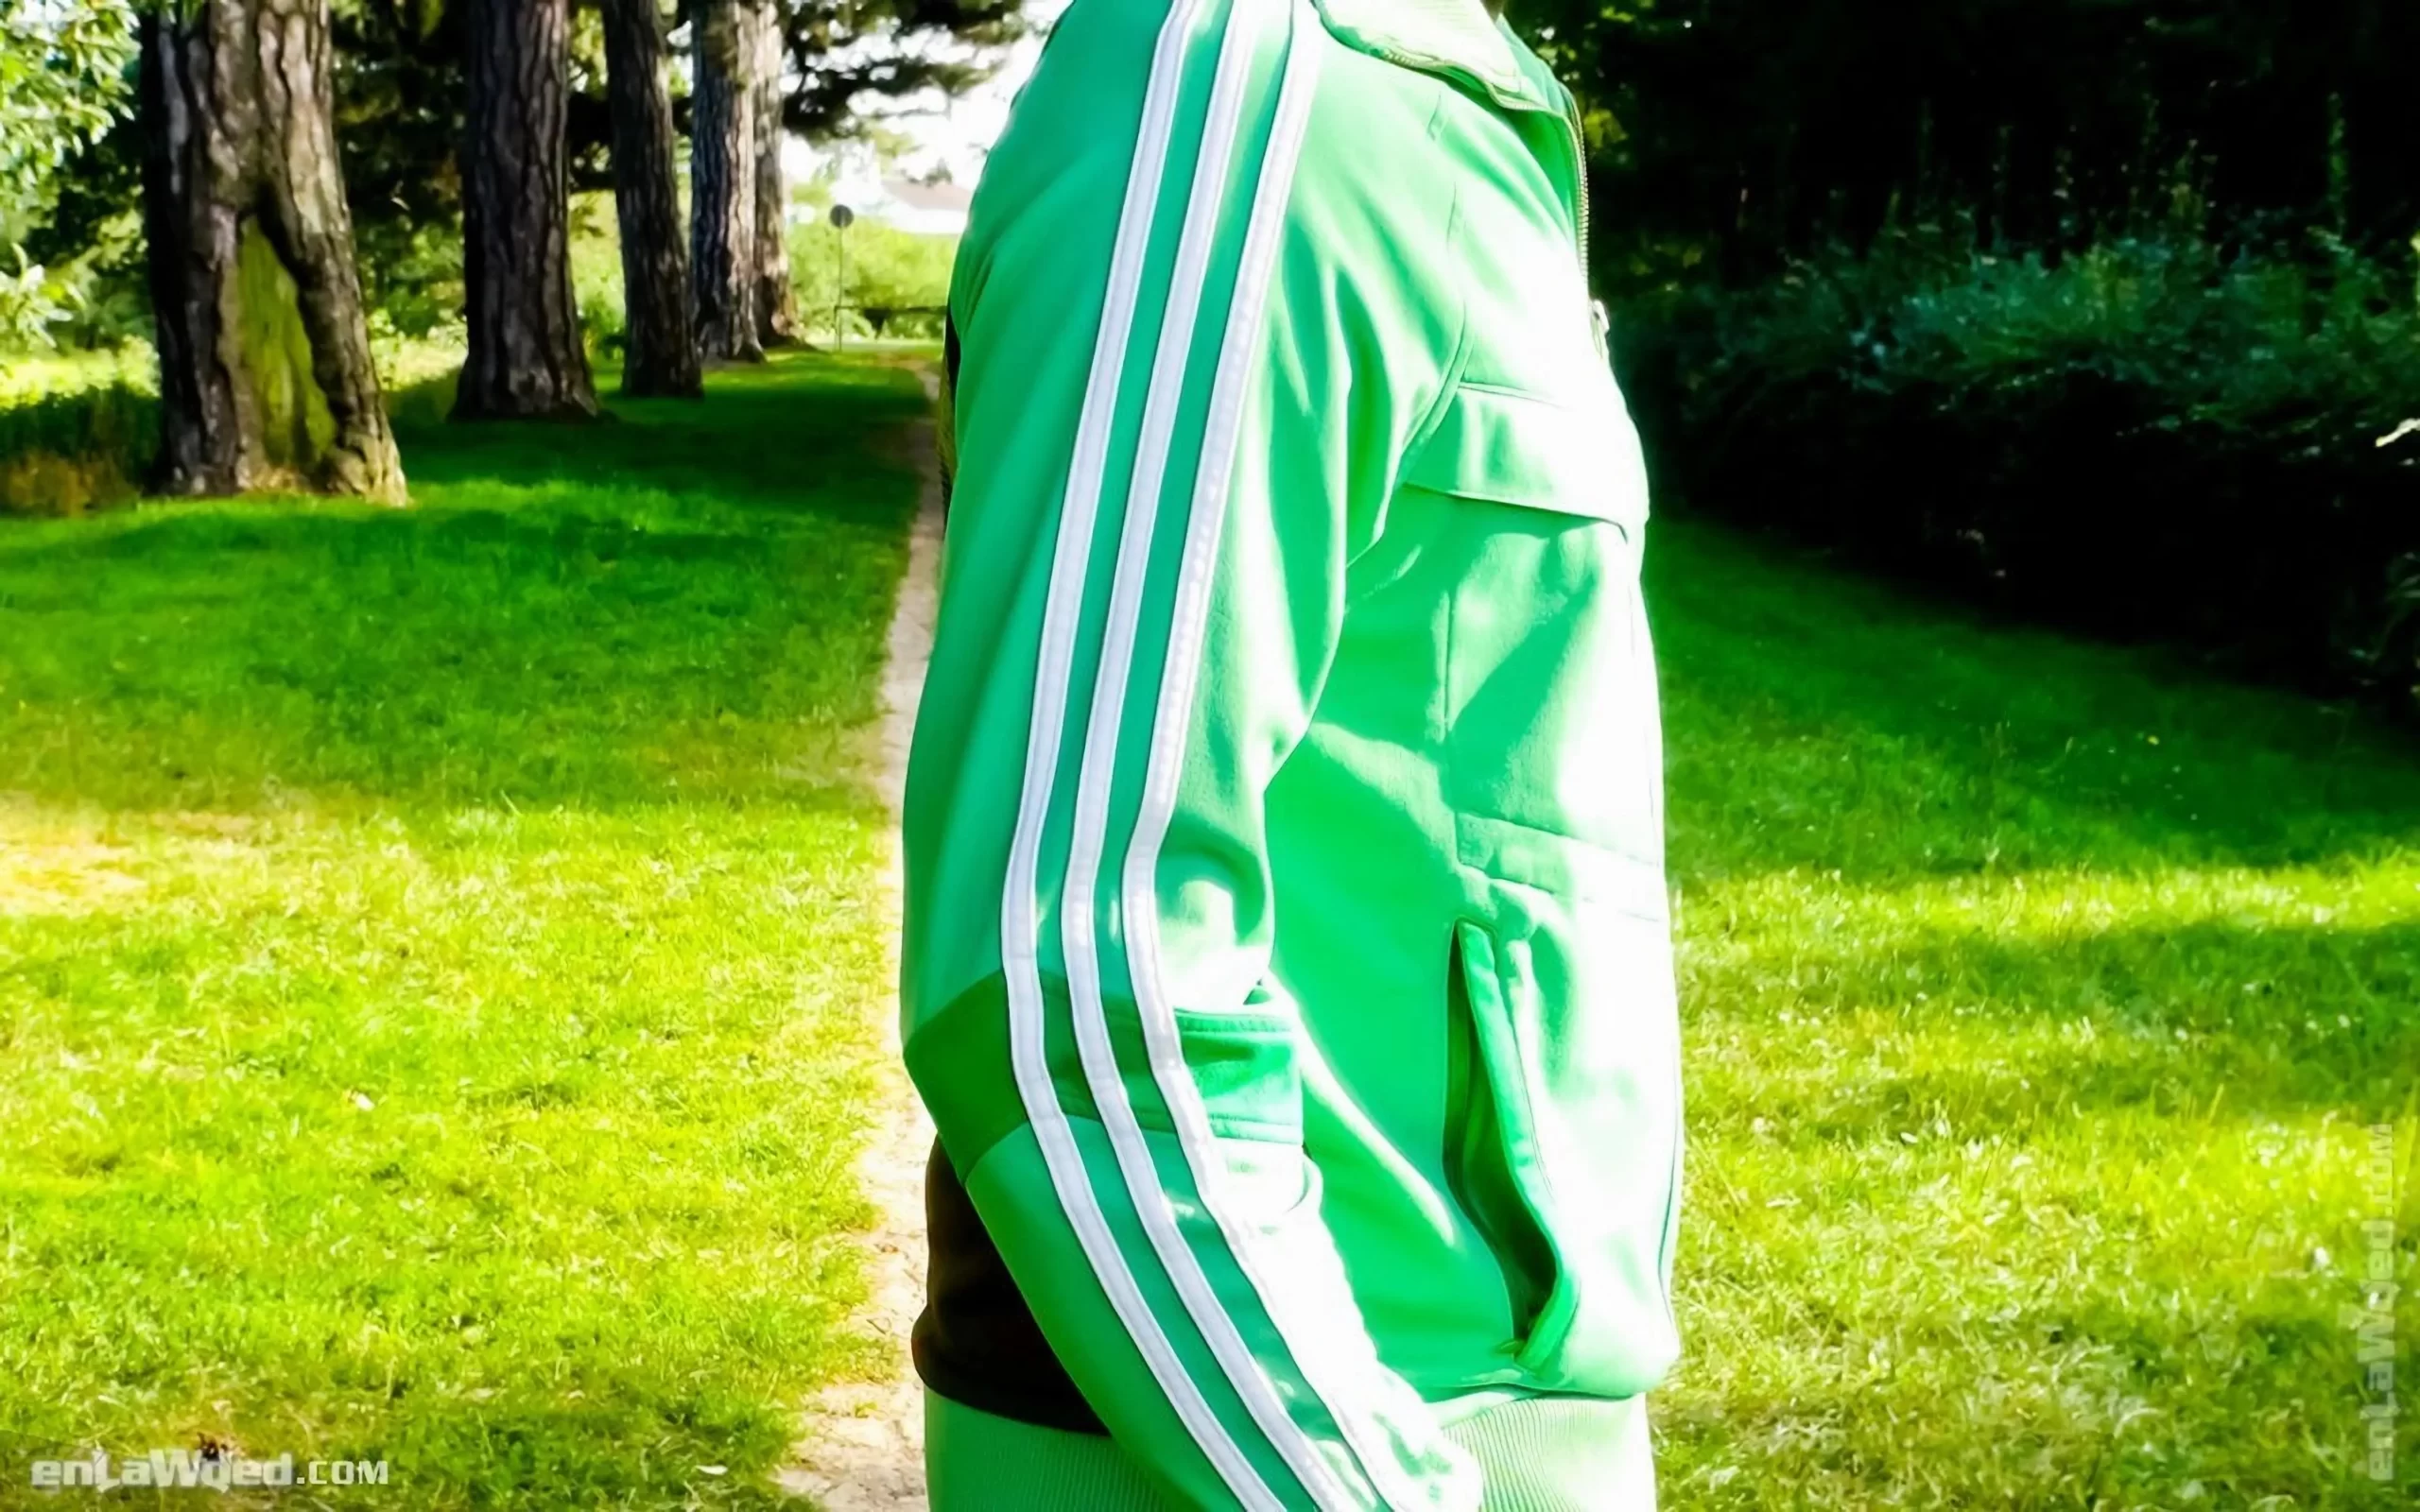 Men’s 2007 Muhammad Ali Confidence TT by Adidas: Launching (EnLawded.com file #lmc4rf6bx5o8z5rah2)